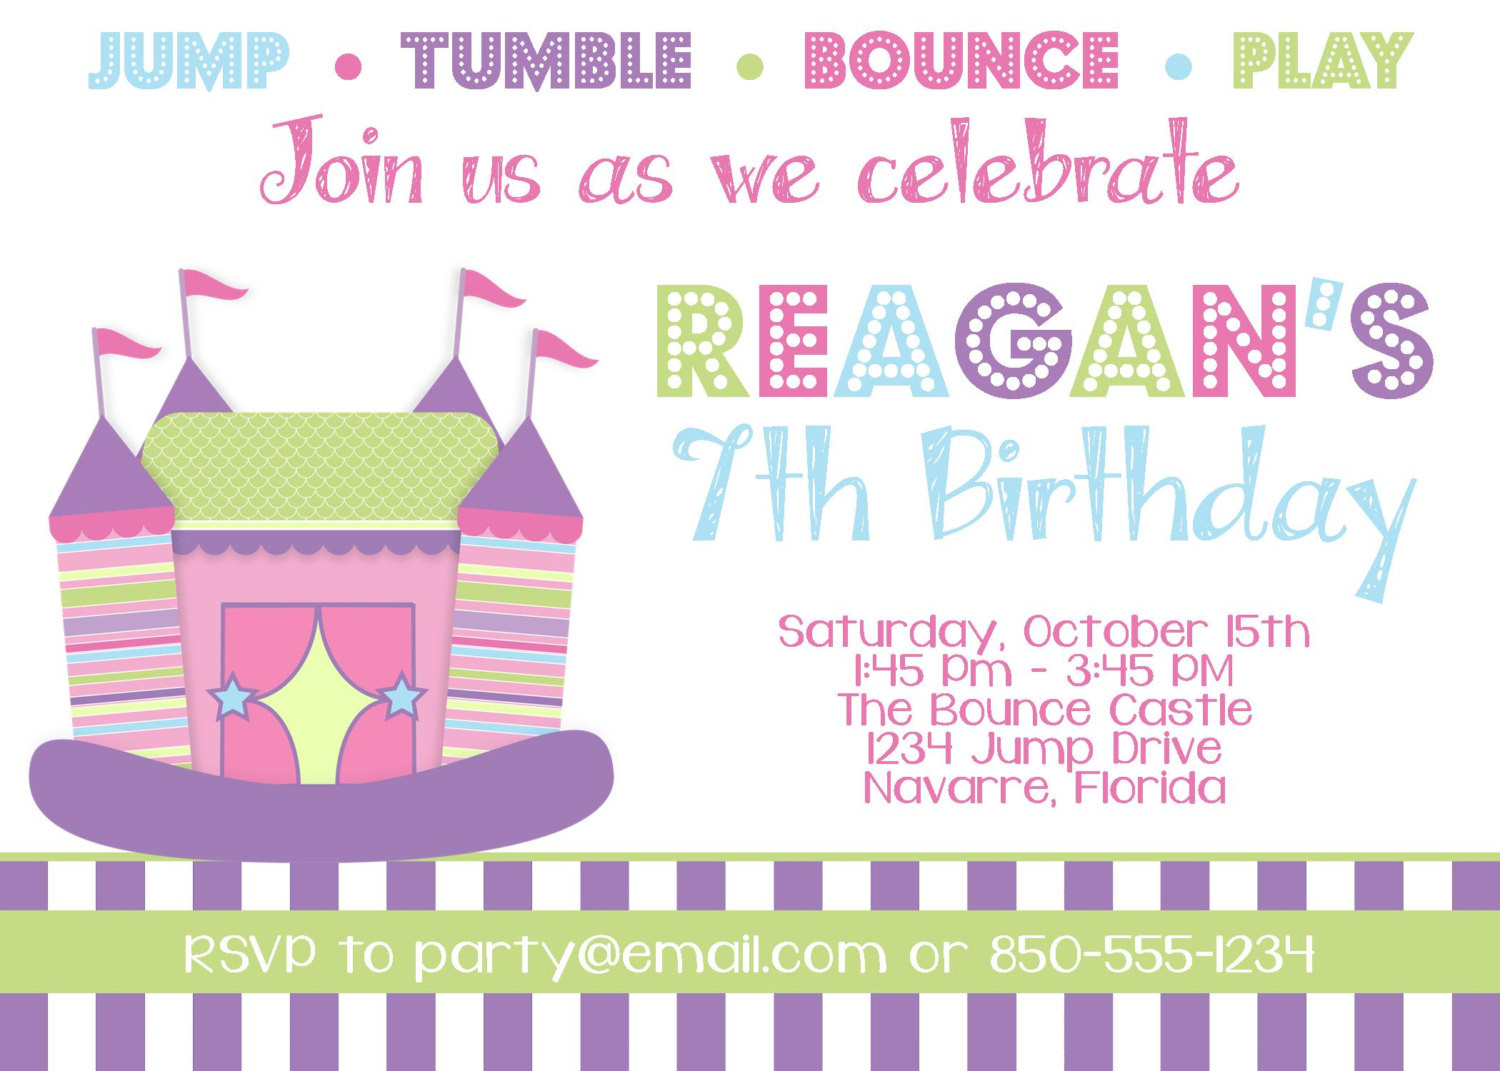 Bounce House Birthday Party Invitations
 BOUNCE HOUSE Birthday Party 5x7 Invitation by PartySoPerfect